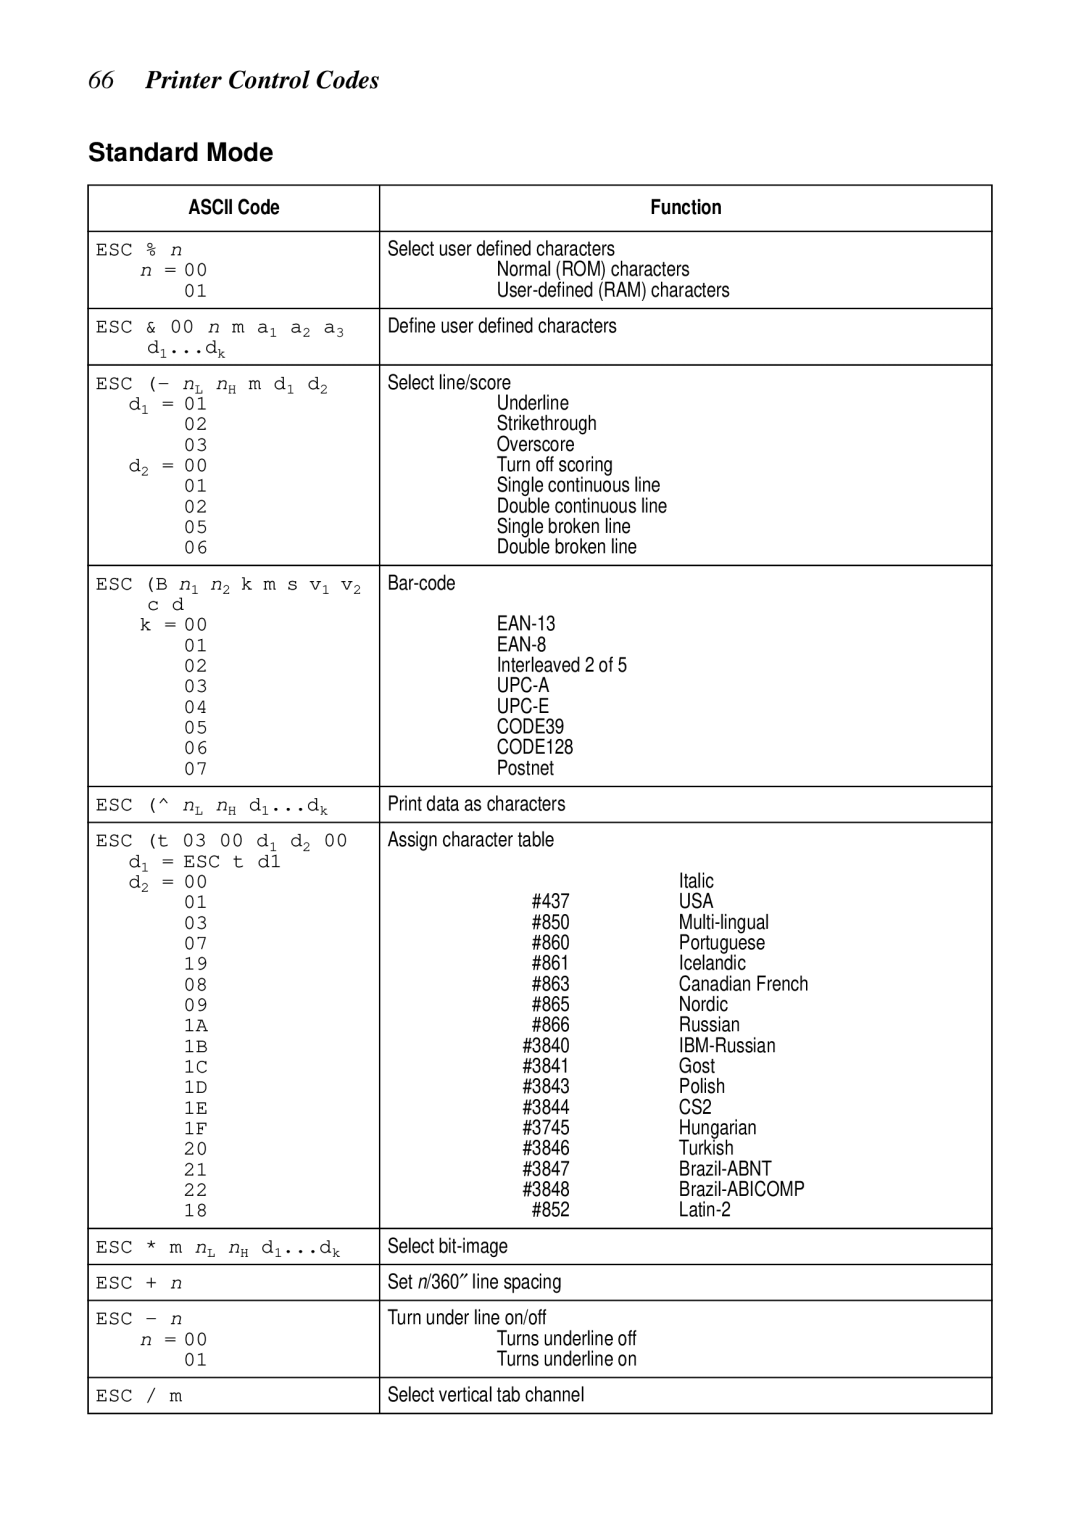 Star Micronics LC-8021 manual Printer Control Codes, Standard Mode 